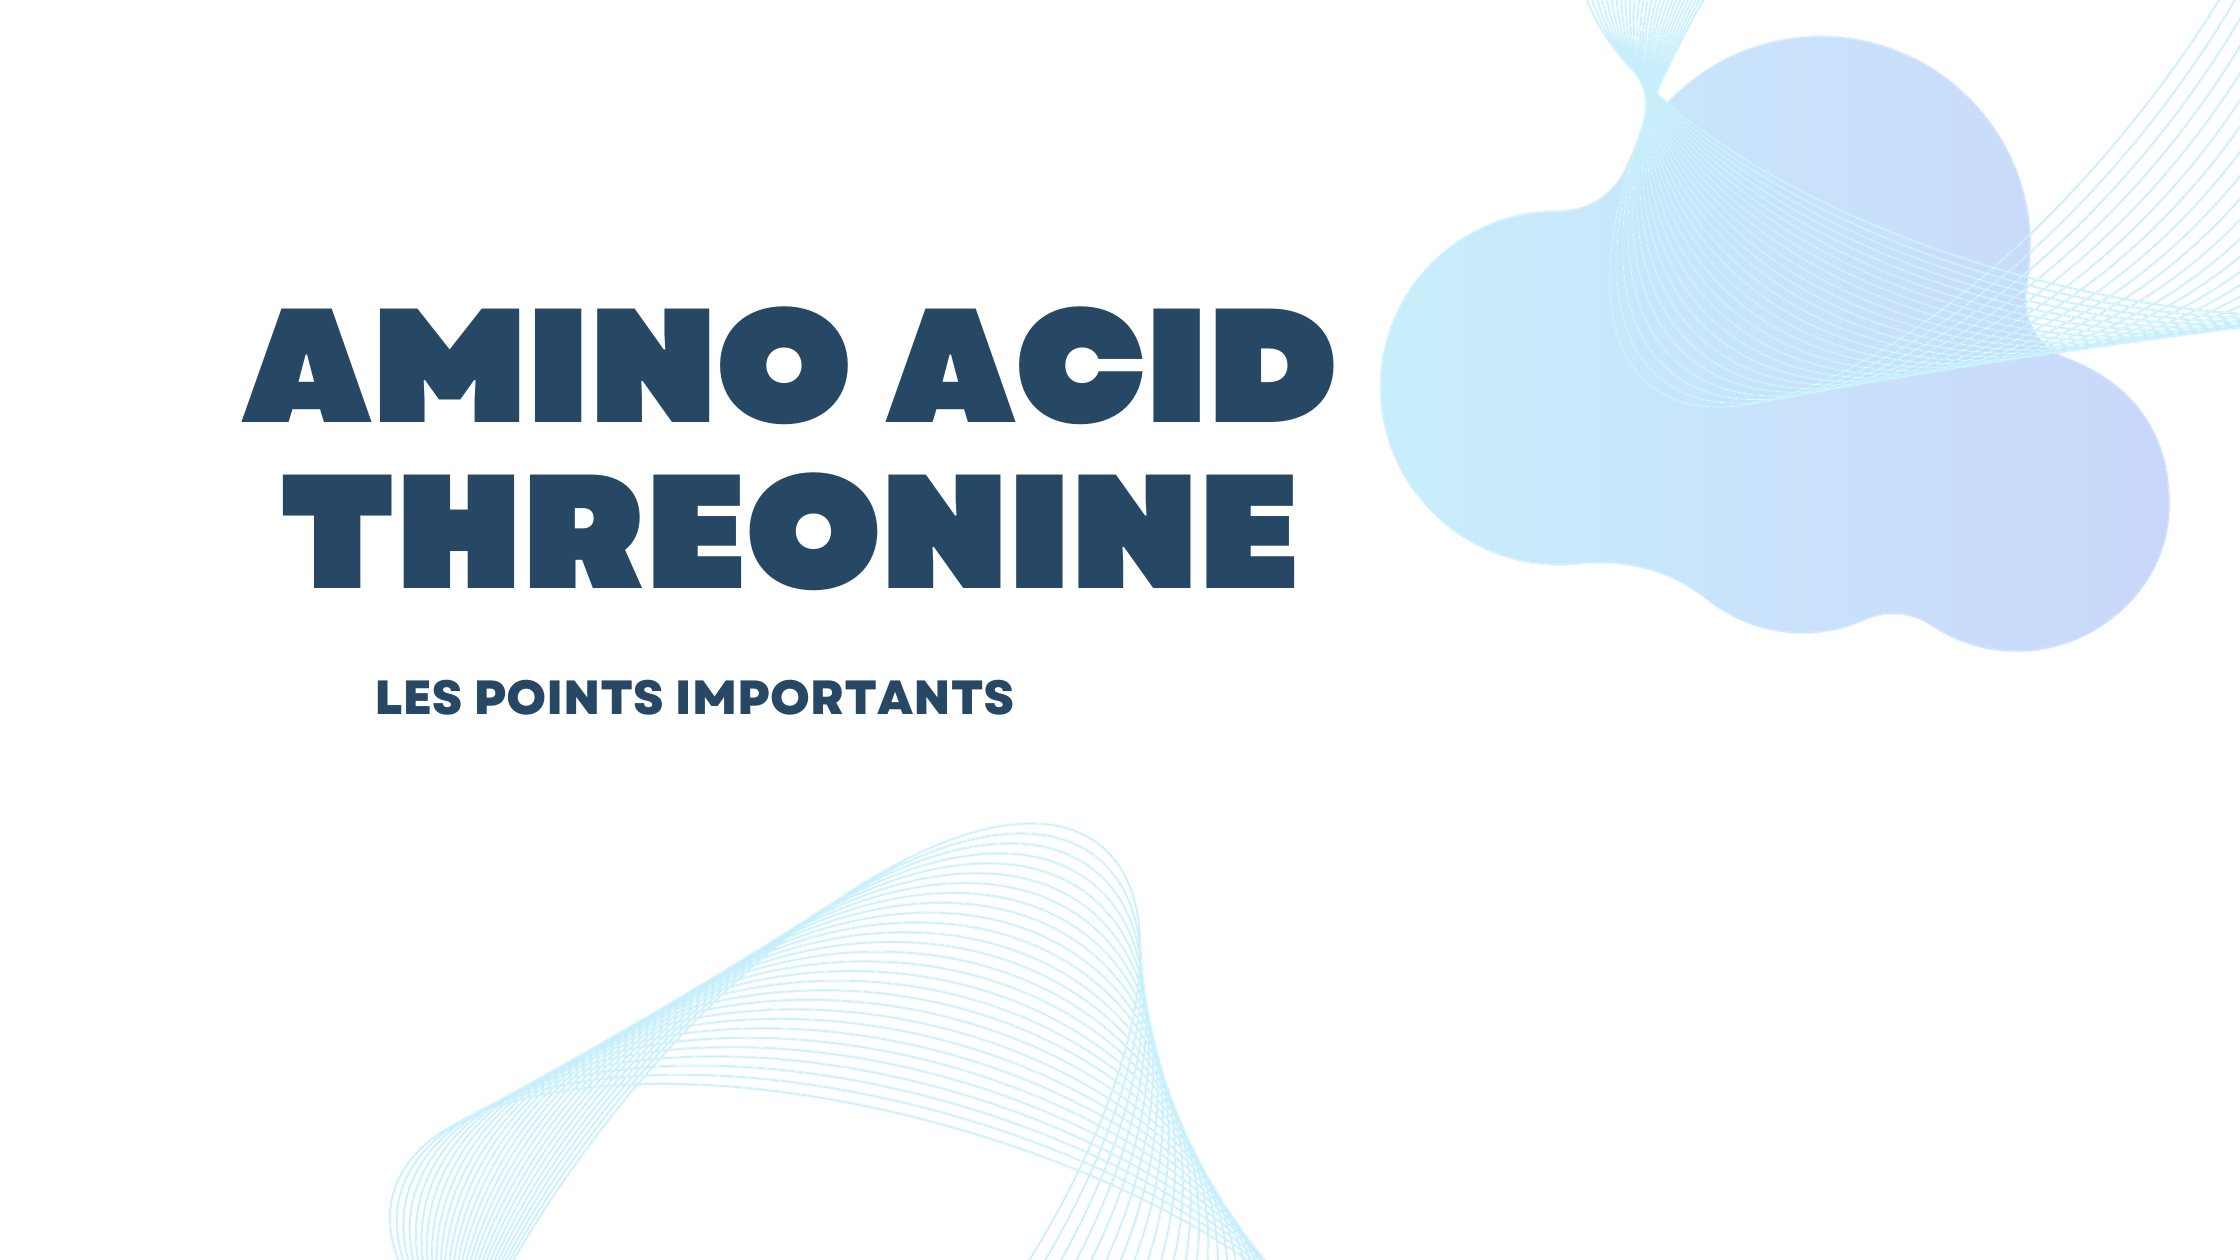 amino acid threonine | Les points importants